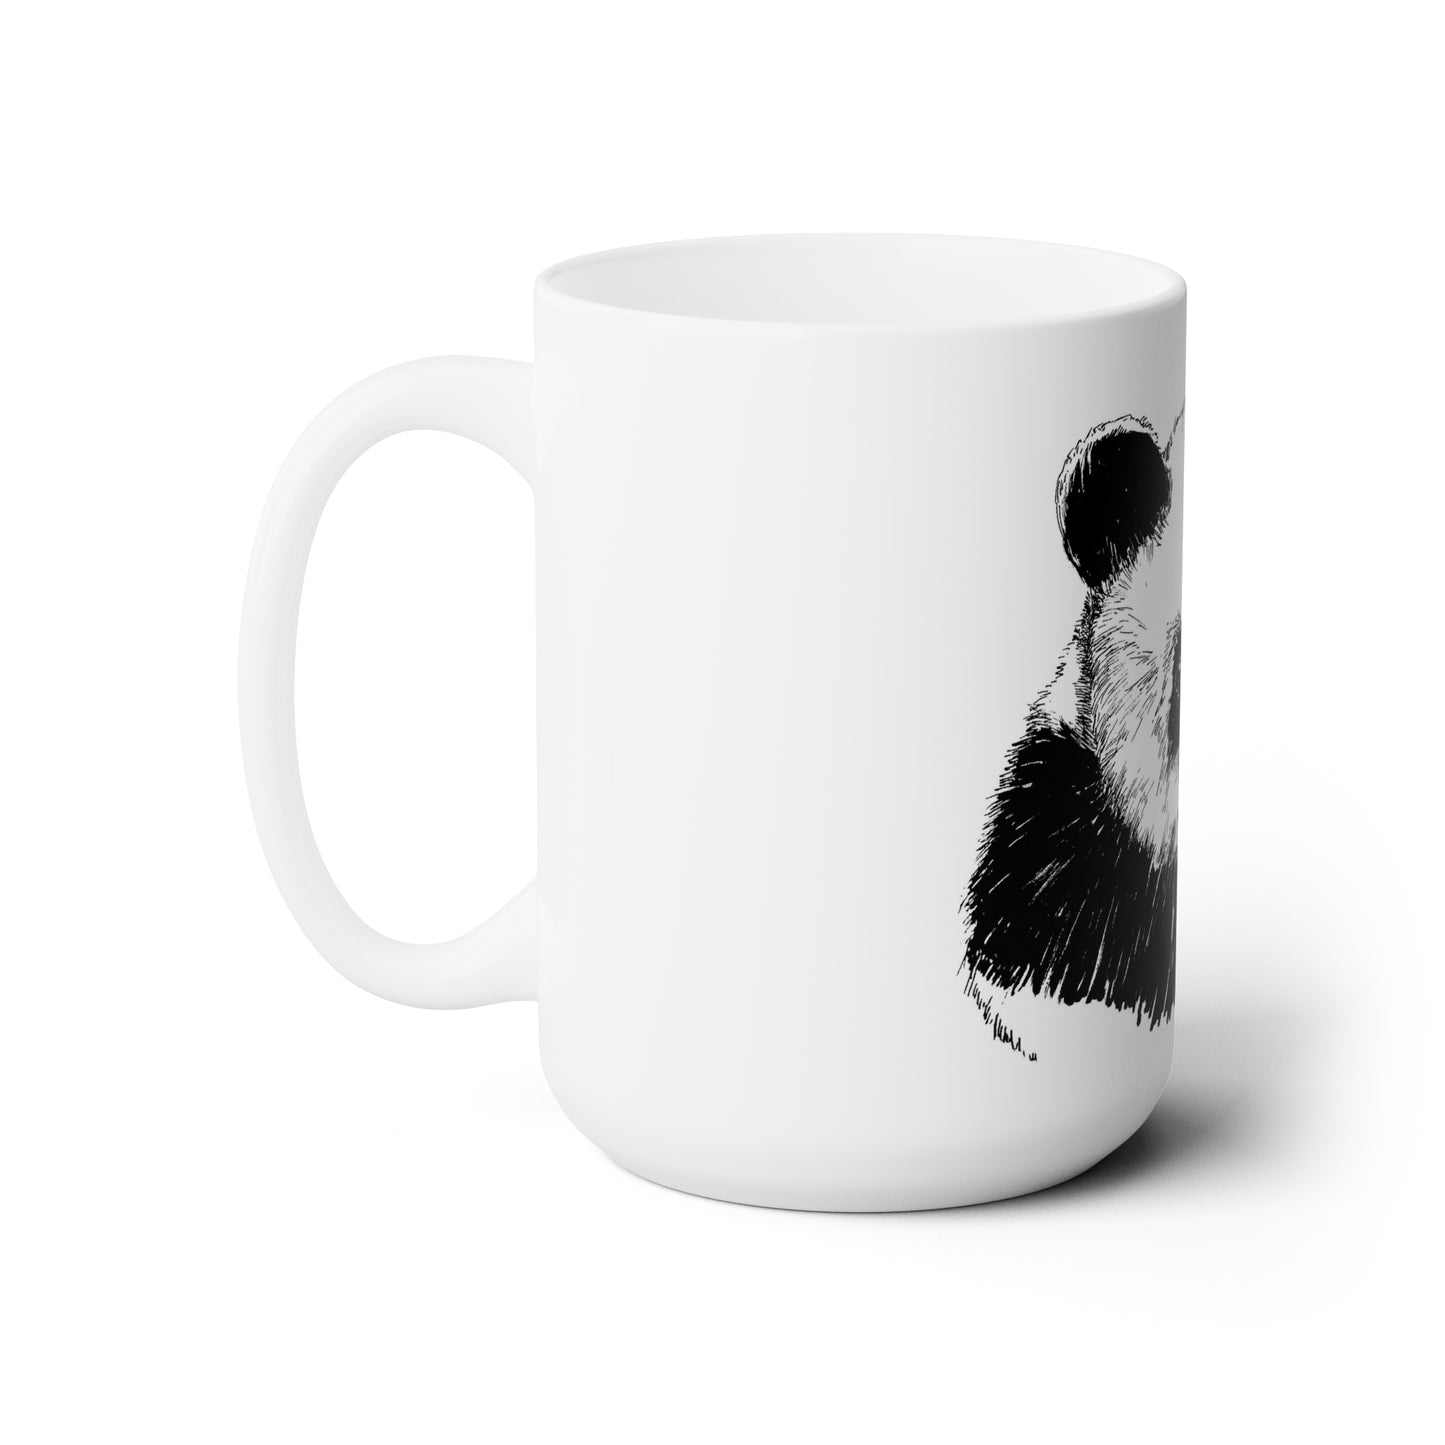 White Ceramic Mug 15oz - Minimalistic Monochrome Design of Panda